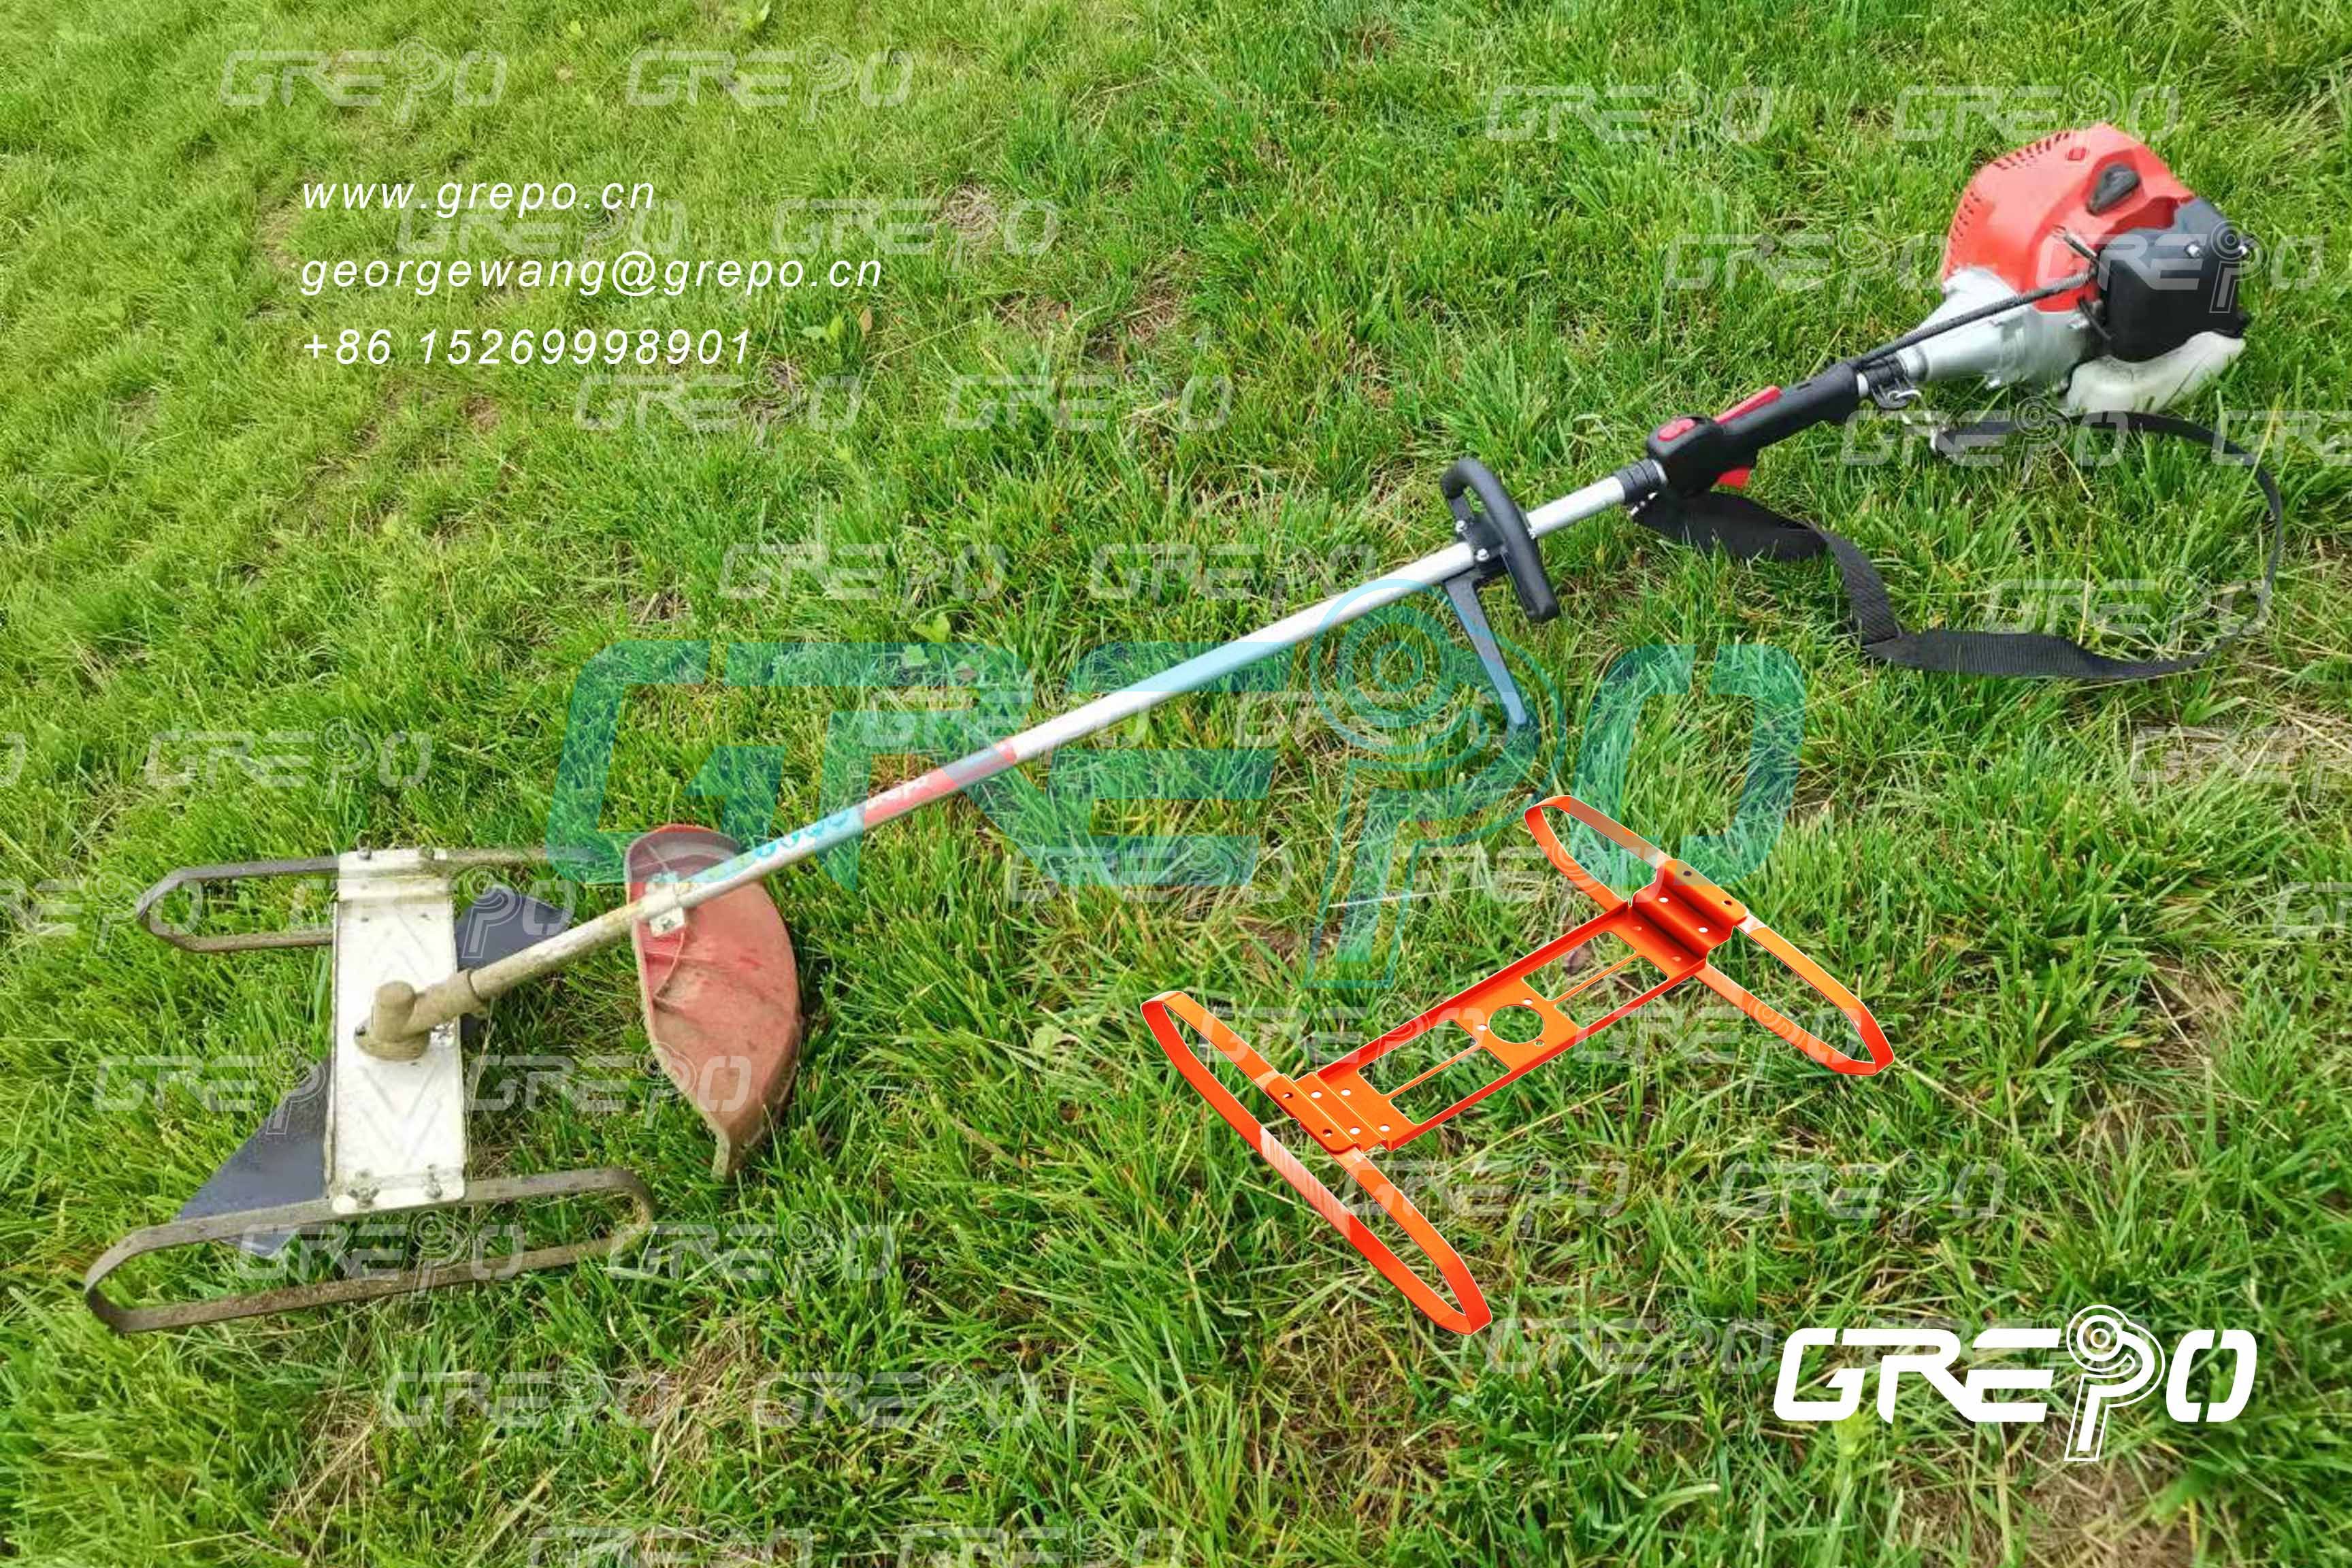 This brush cutter work like lawn mower?(图1)